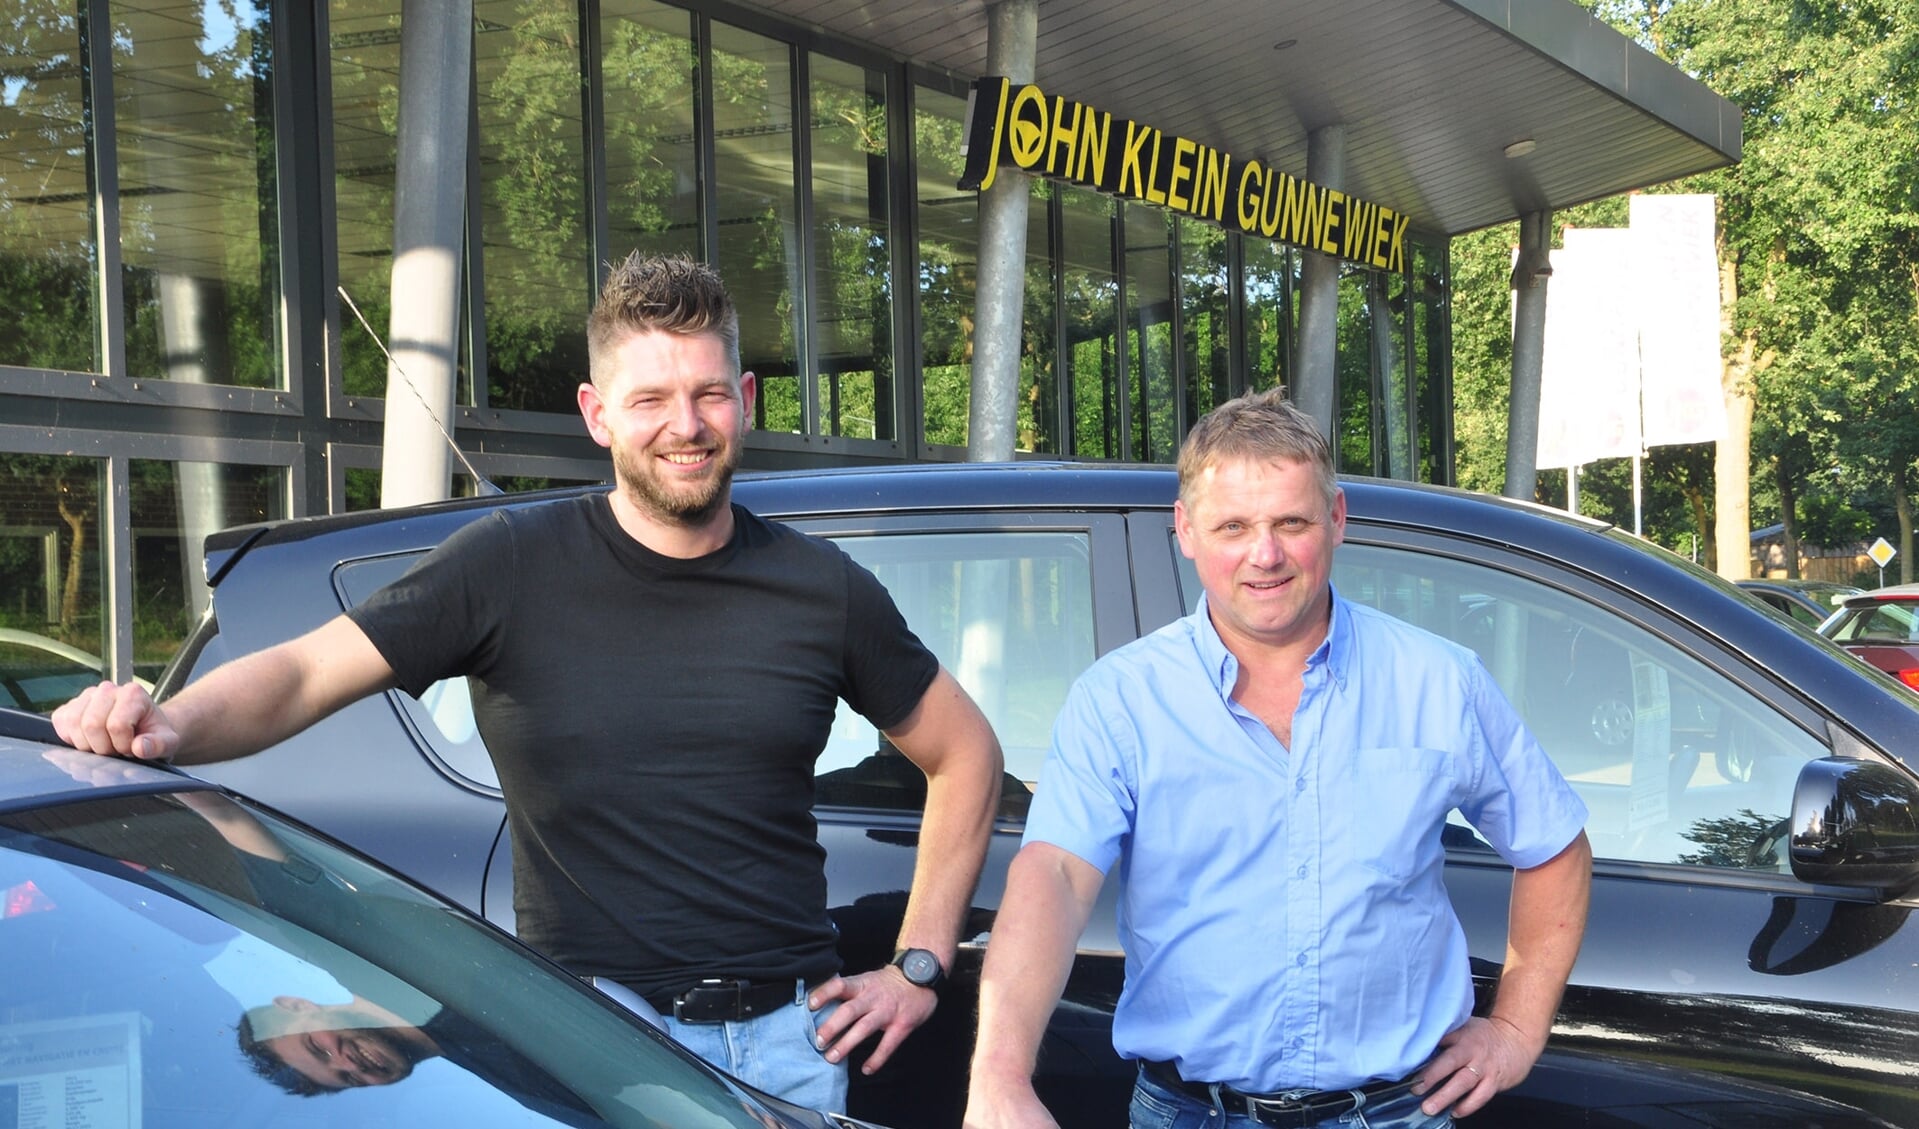 Han Helmers (l) en John Klein Gunnewiek gaan samen verder onder de naam Gunnewiek-Helmers Autobedrijf. Foto: PR